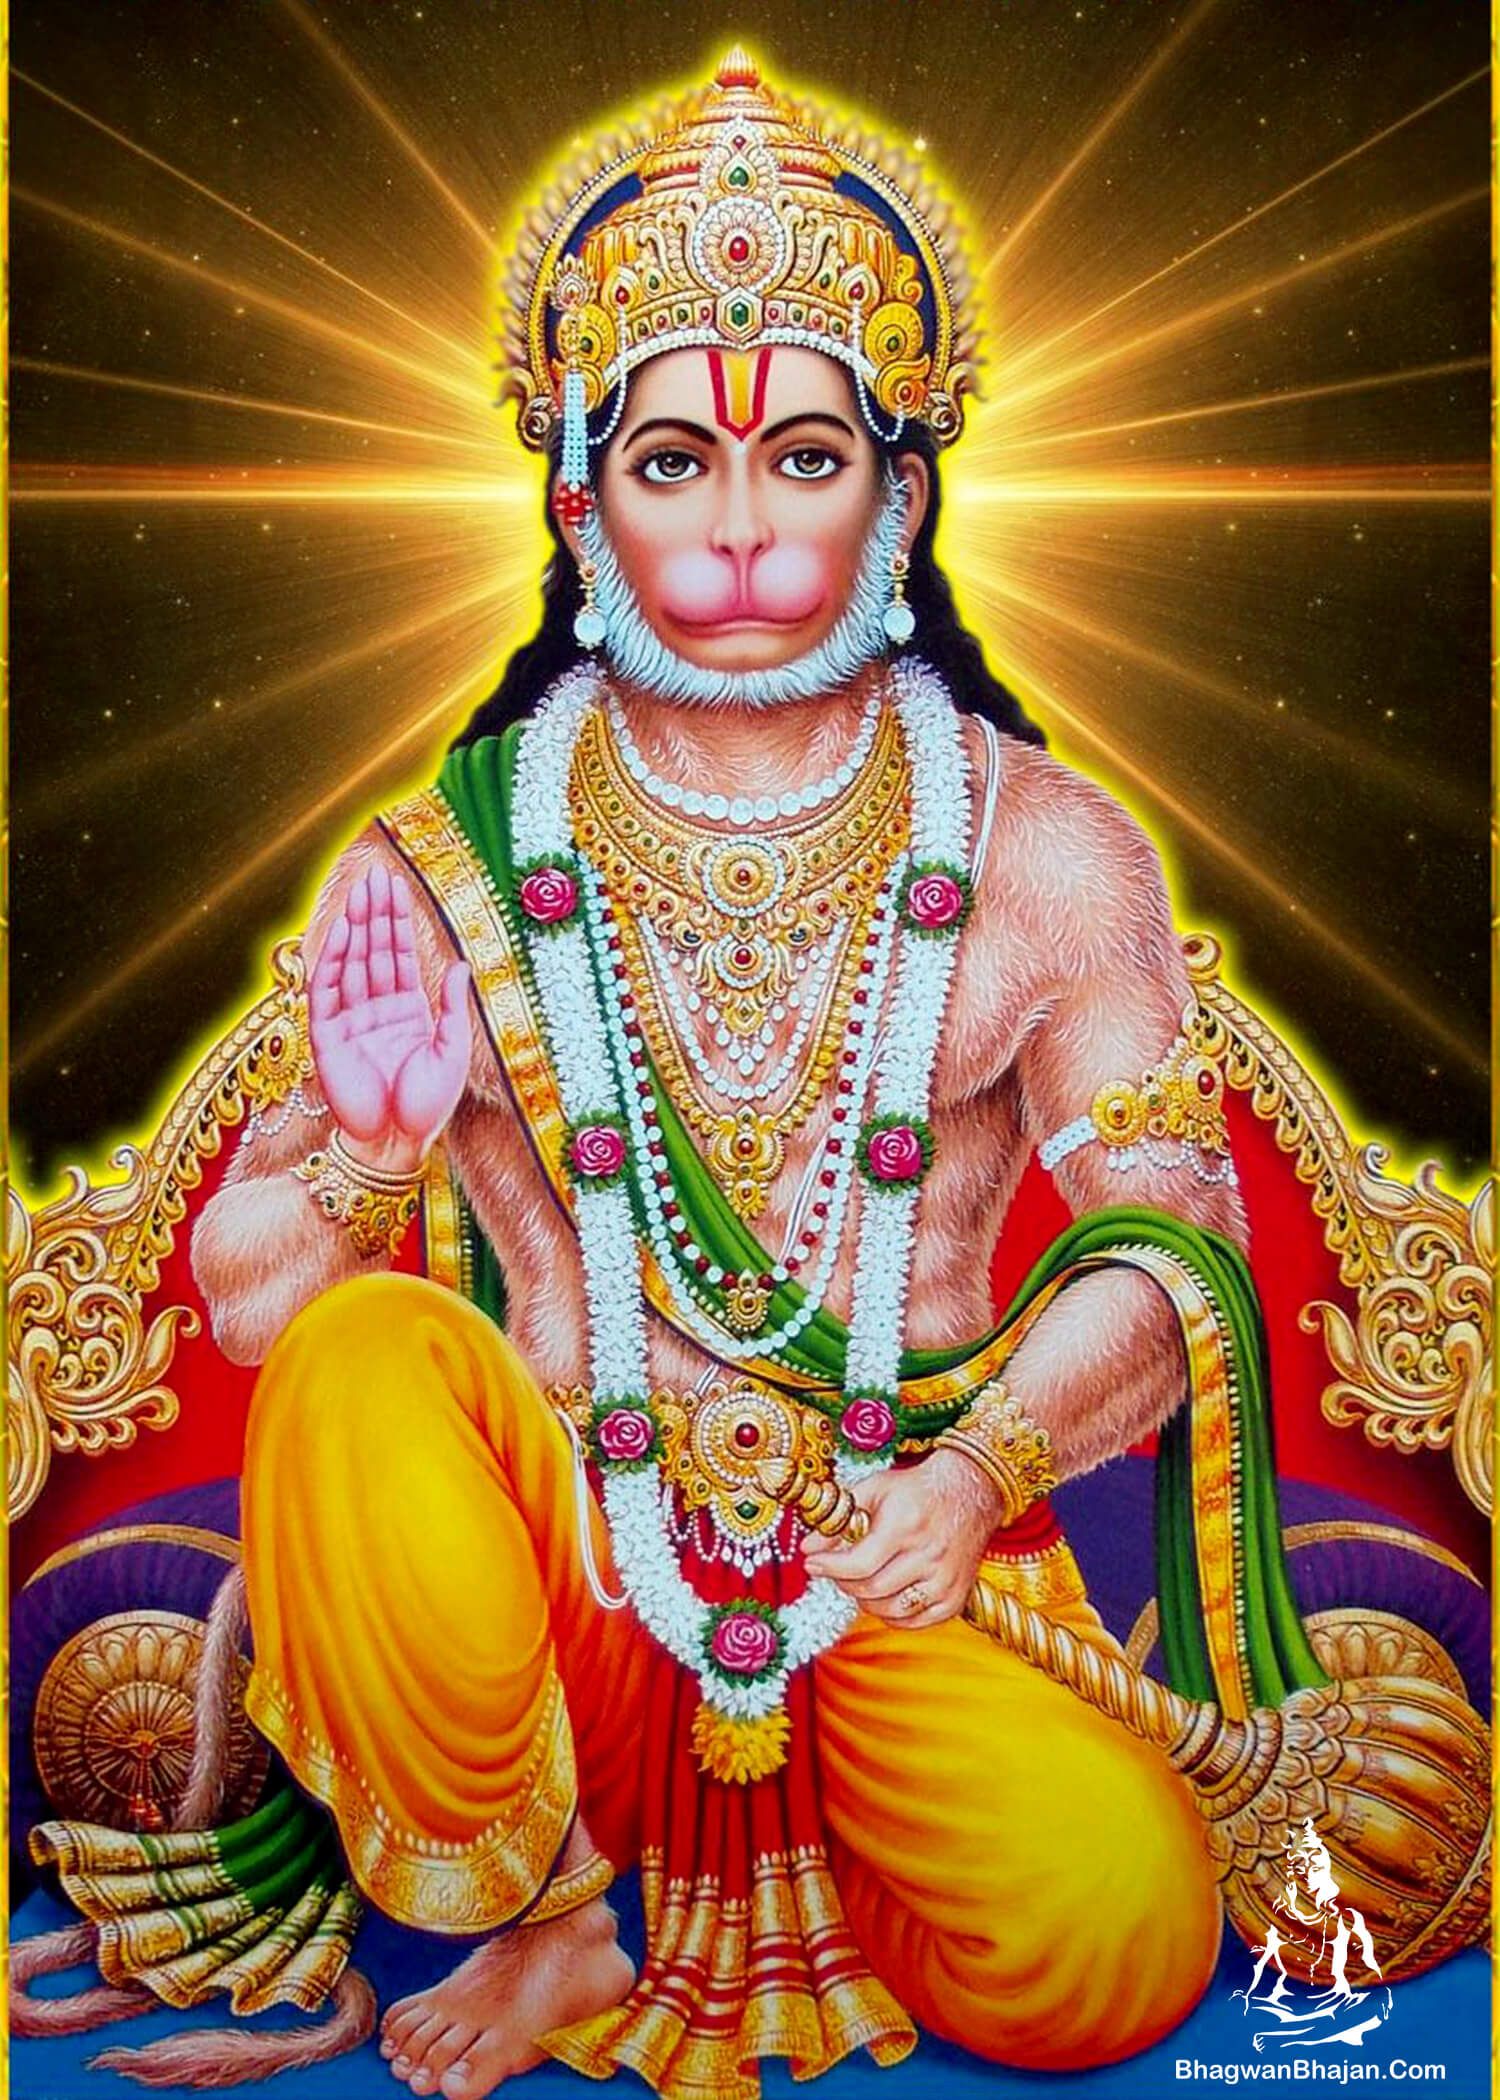 Bhagwan Hanuman Wallpaper Download. Hanuman Ji Photo, Image. Bajrangbali HD Image. Sankatmochan Hanuman Wallpaper & Image